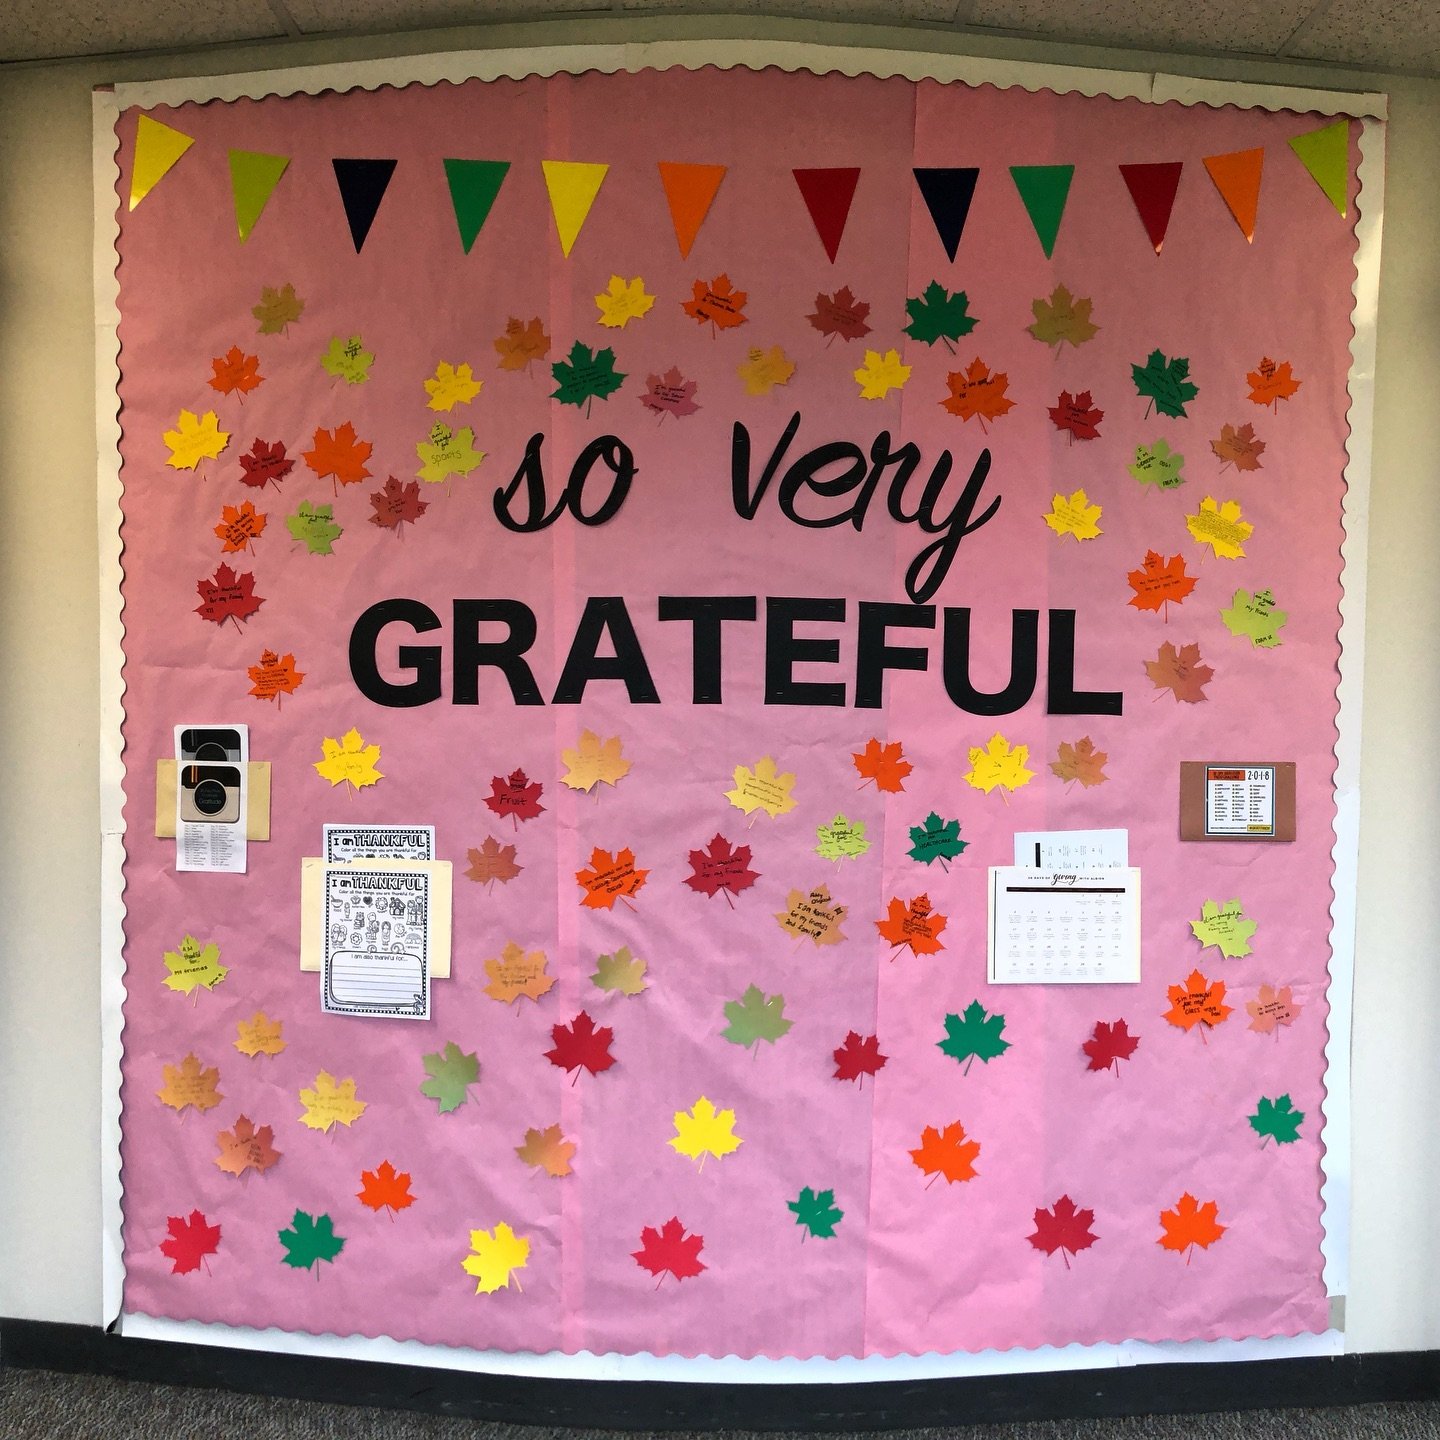 So Very Grateful Thanksgiving bulletin board - Teach Starter